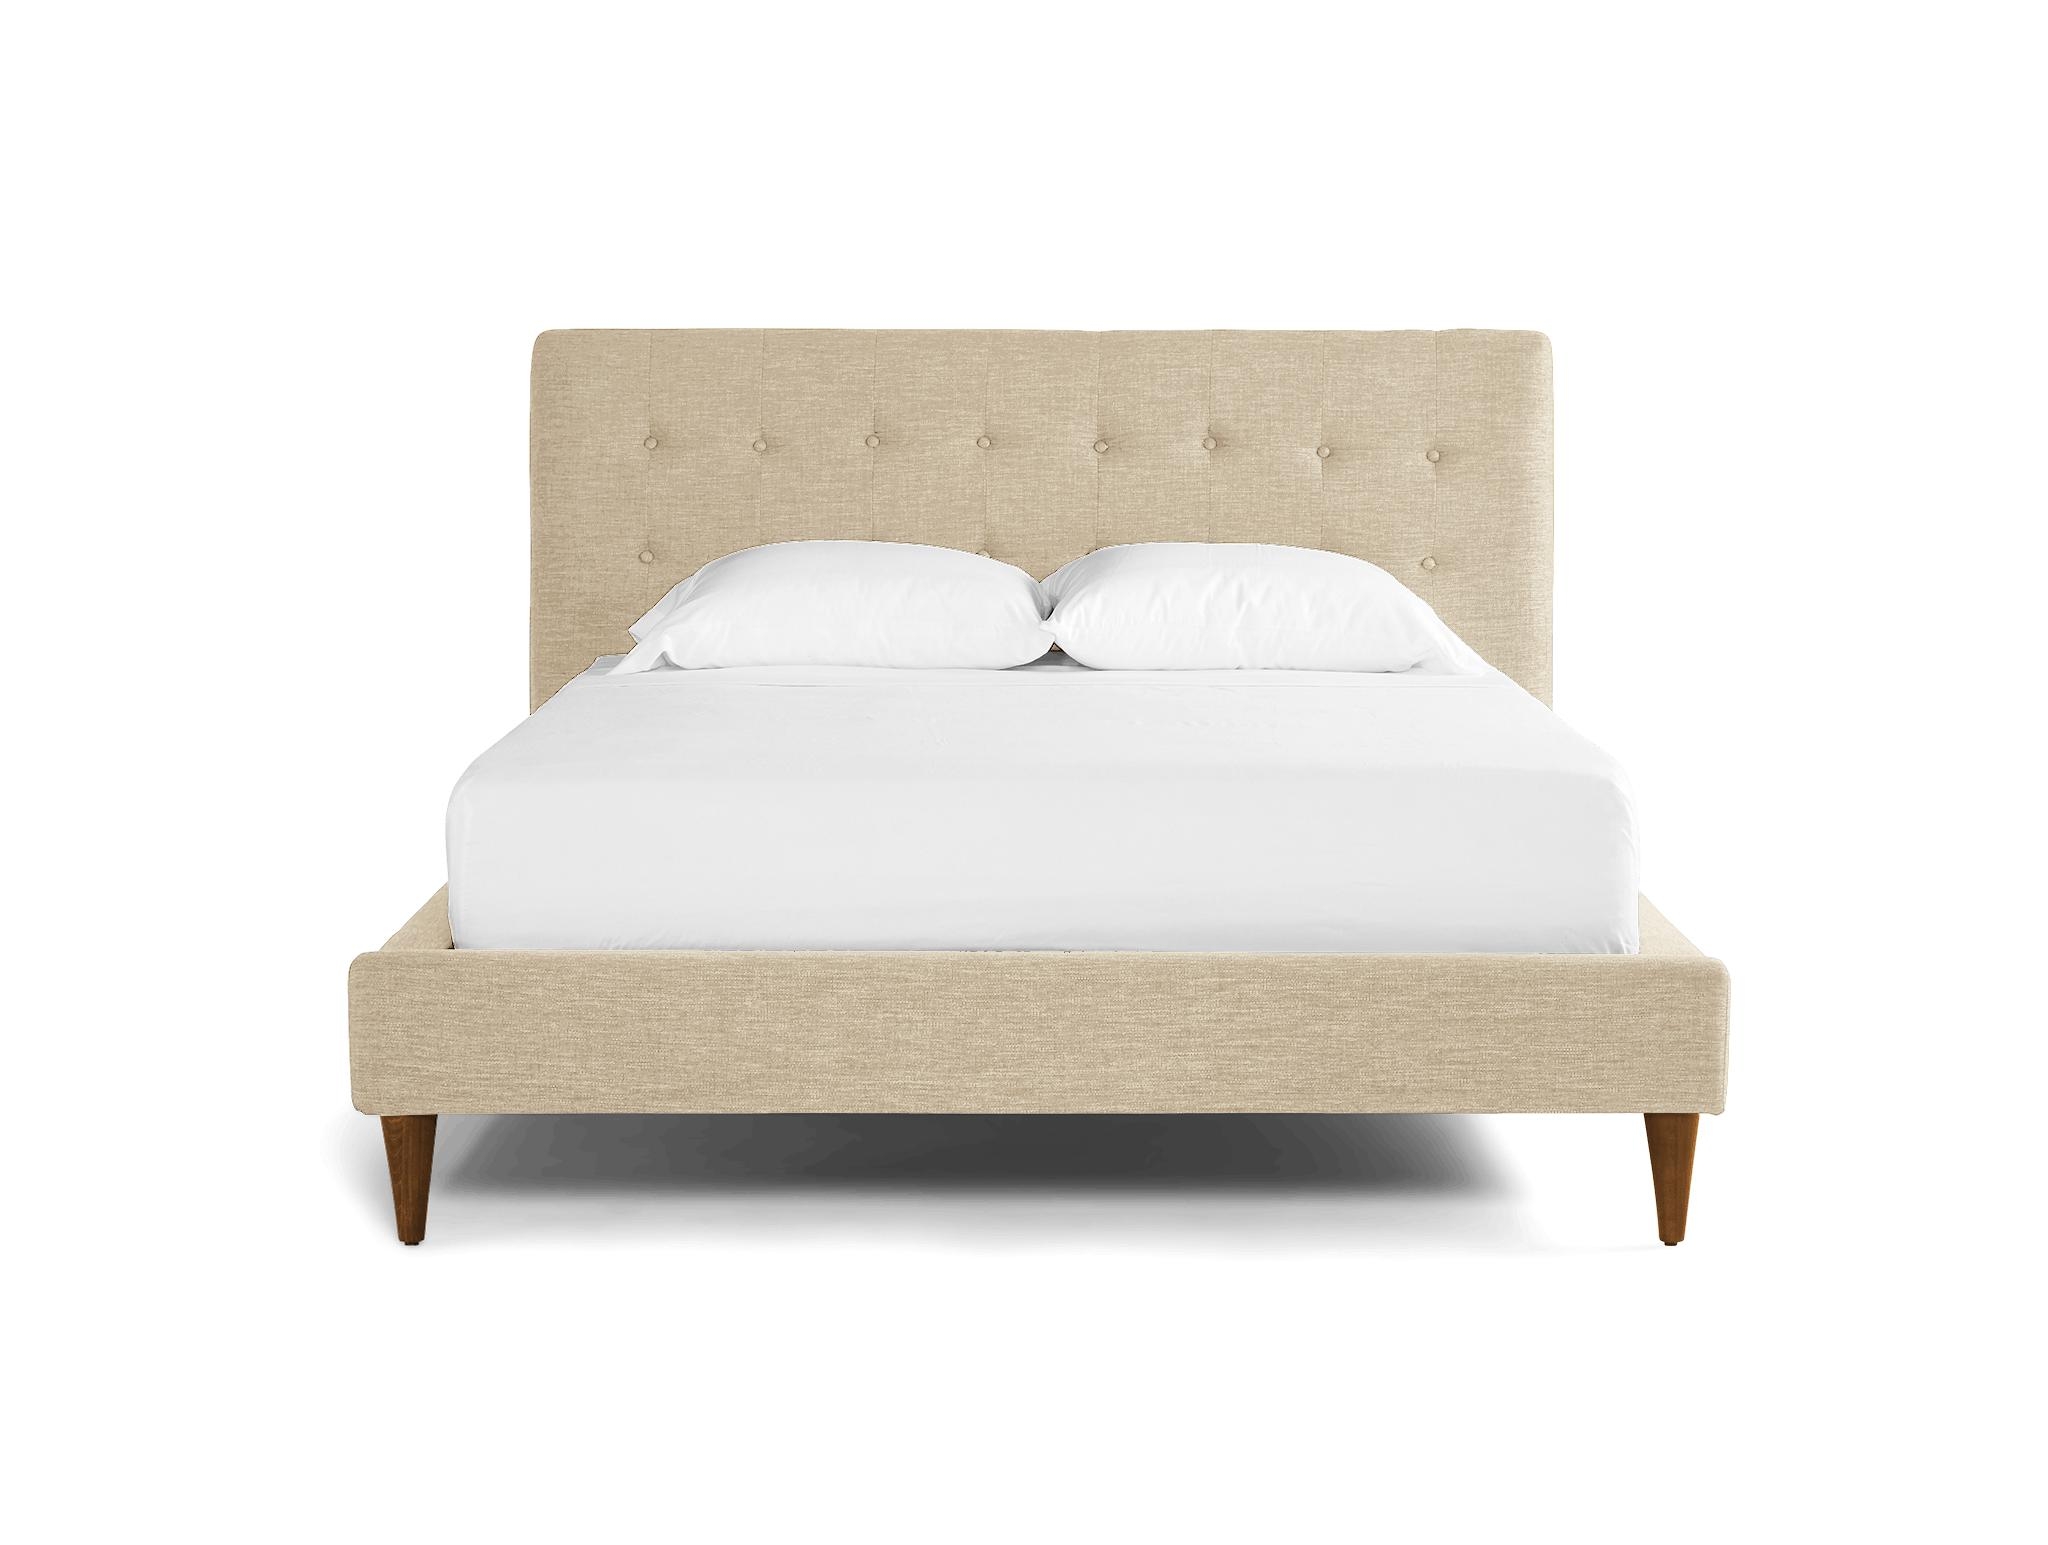 White Eliot Mid Century Modern Bed - Nico Oyster - Mocha - Eastern King - Image 0